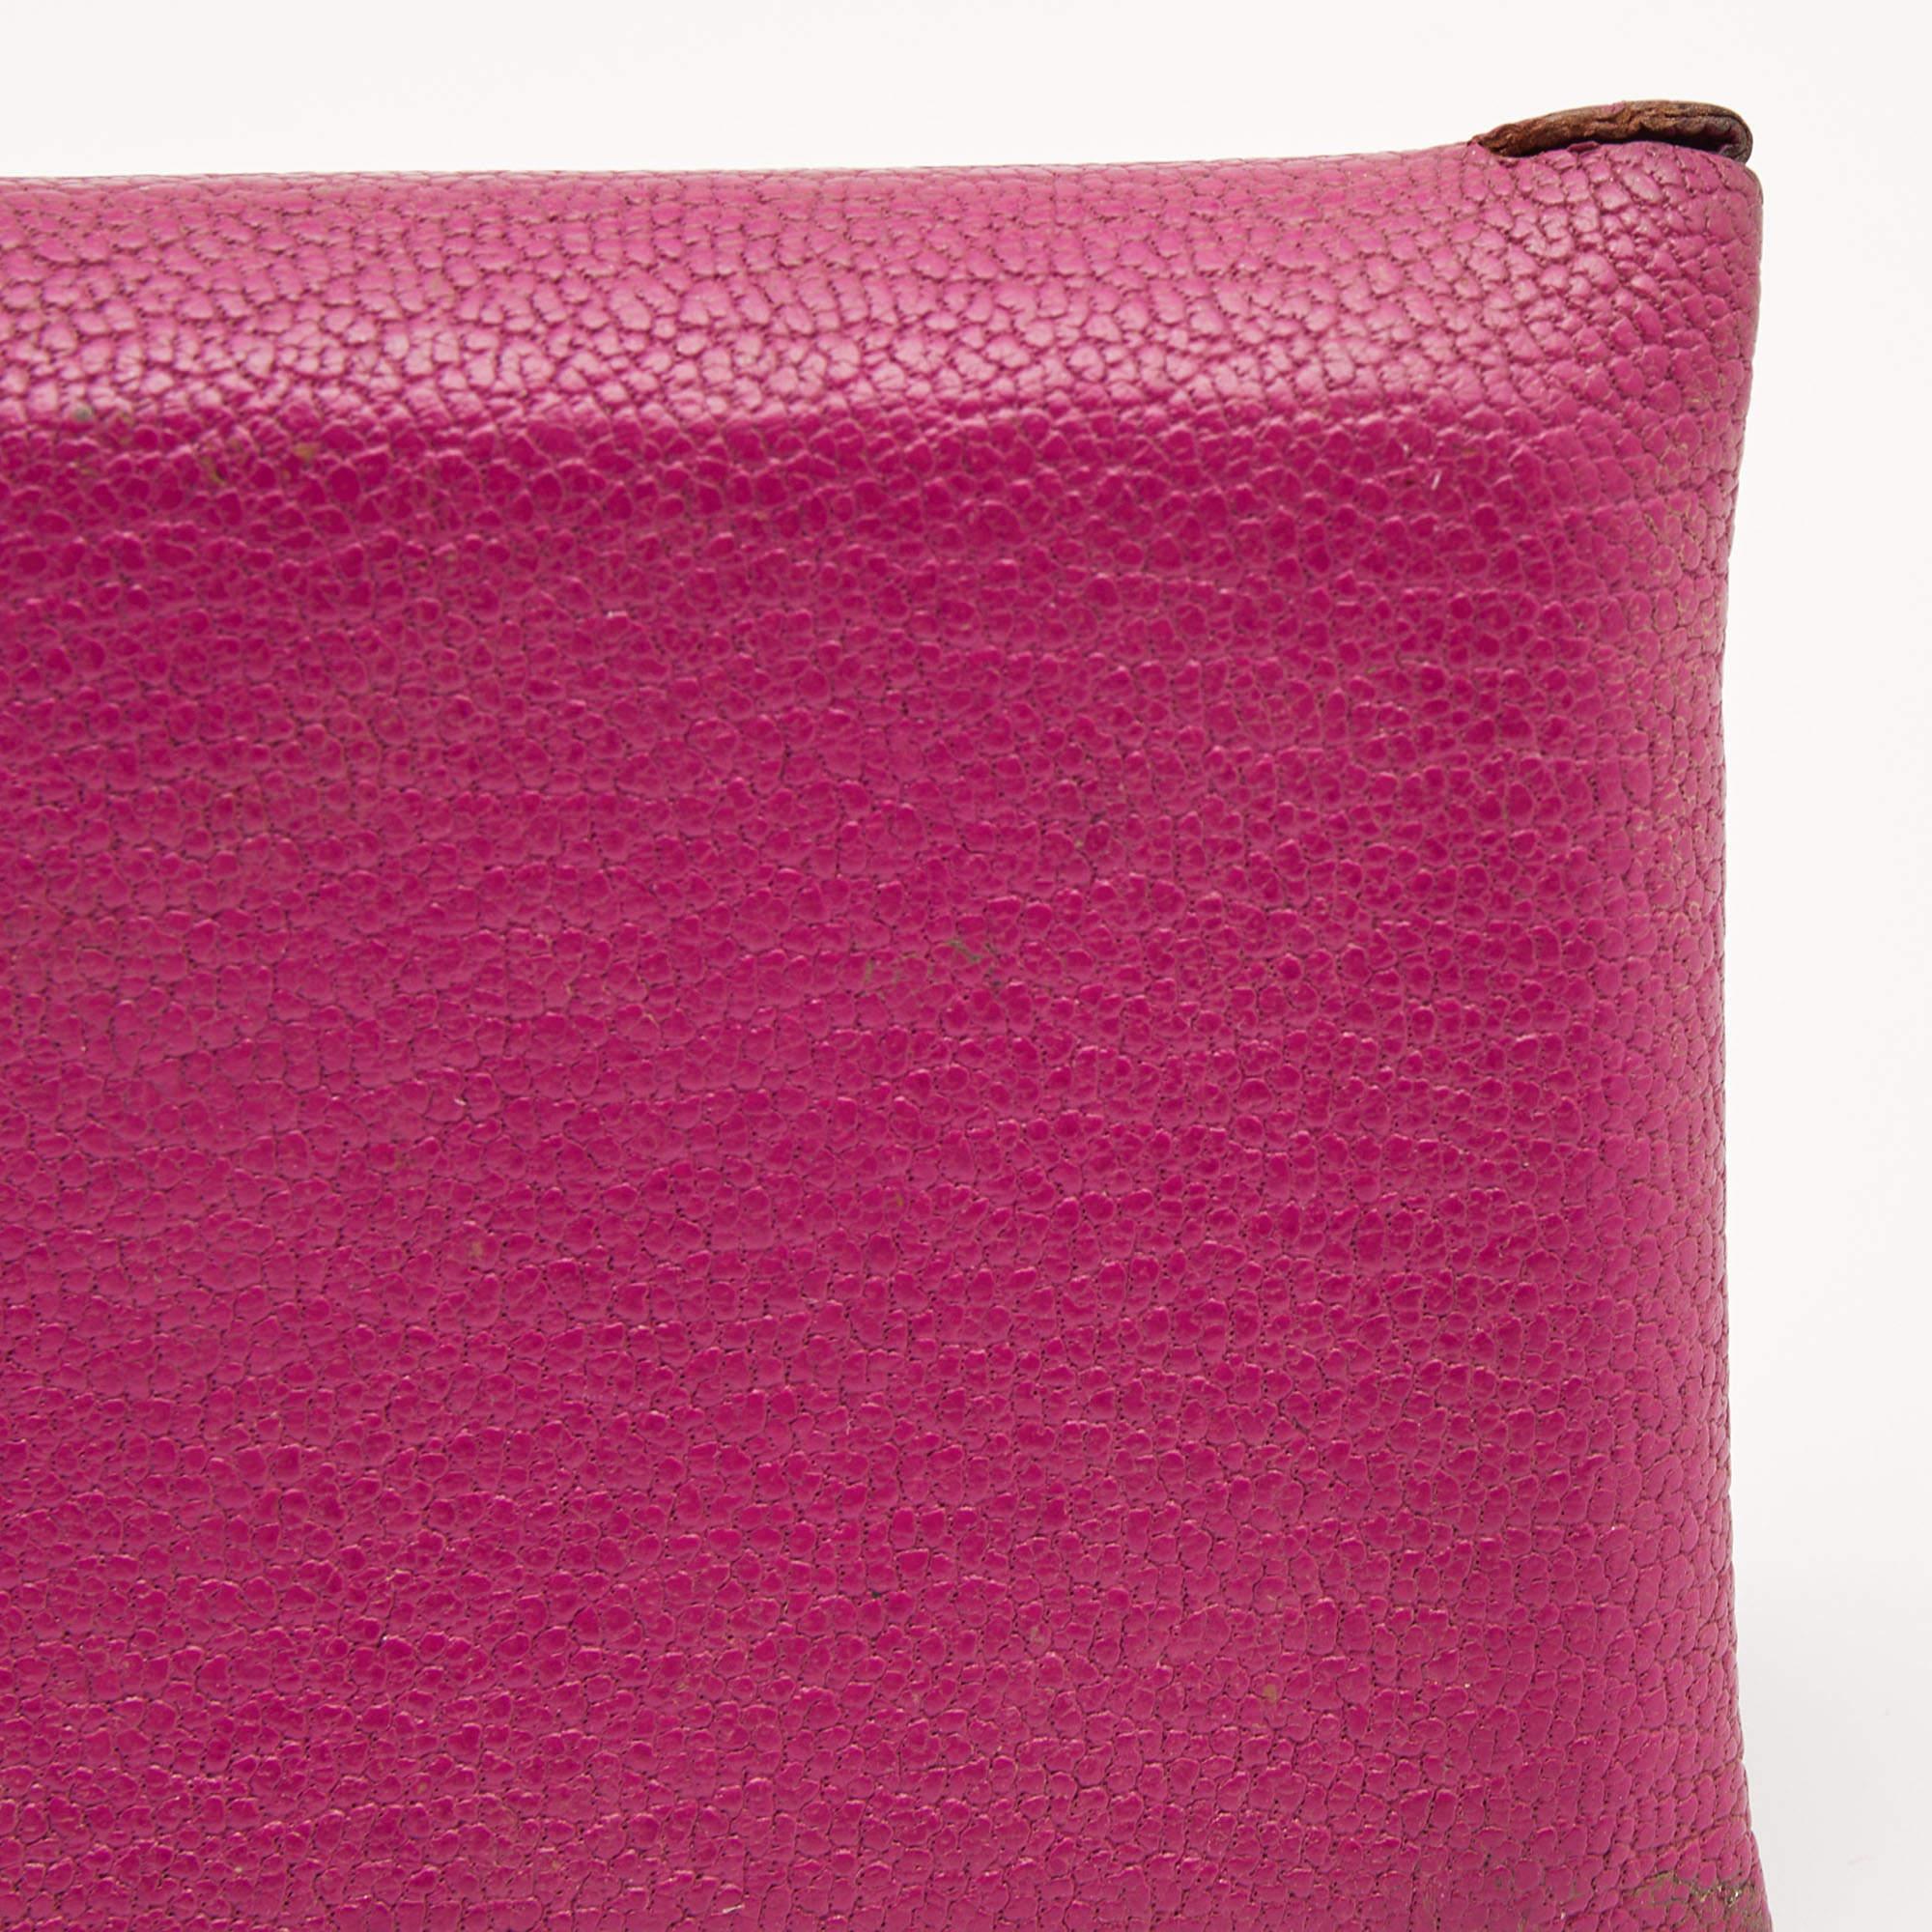 Pink Hermes Cyclamen Chevre Mysore Leather Calvi Card Holder For Sale